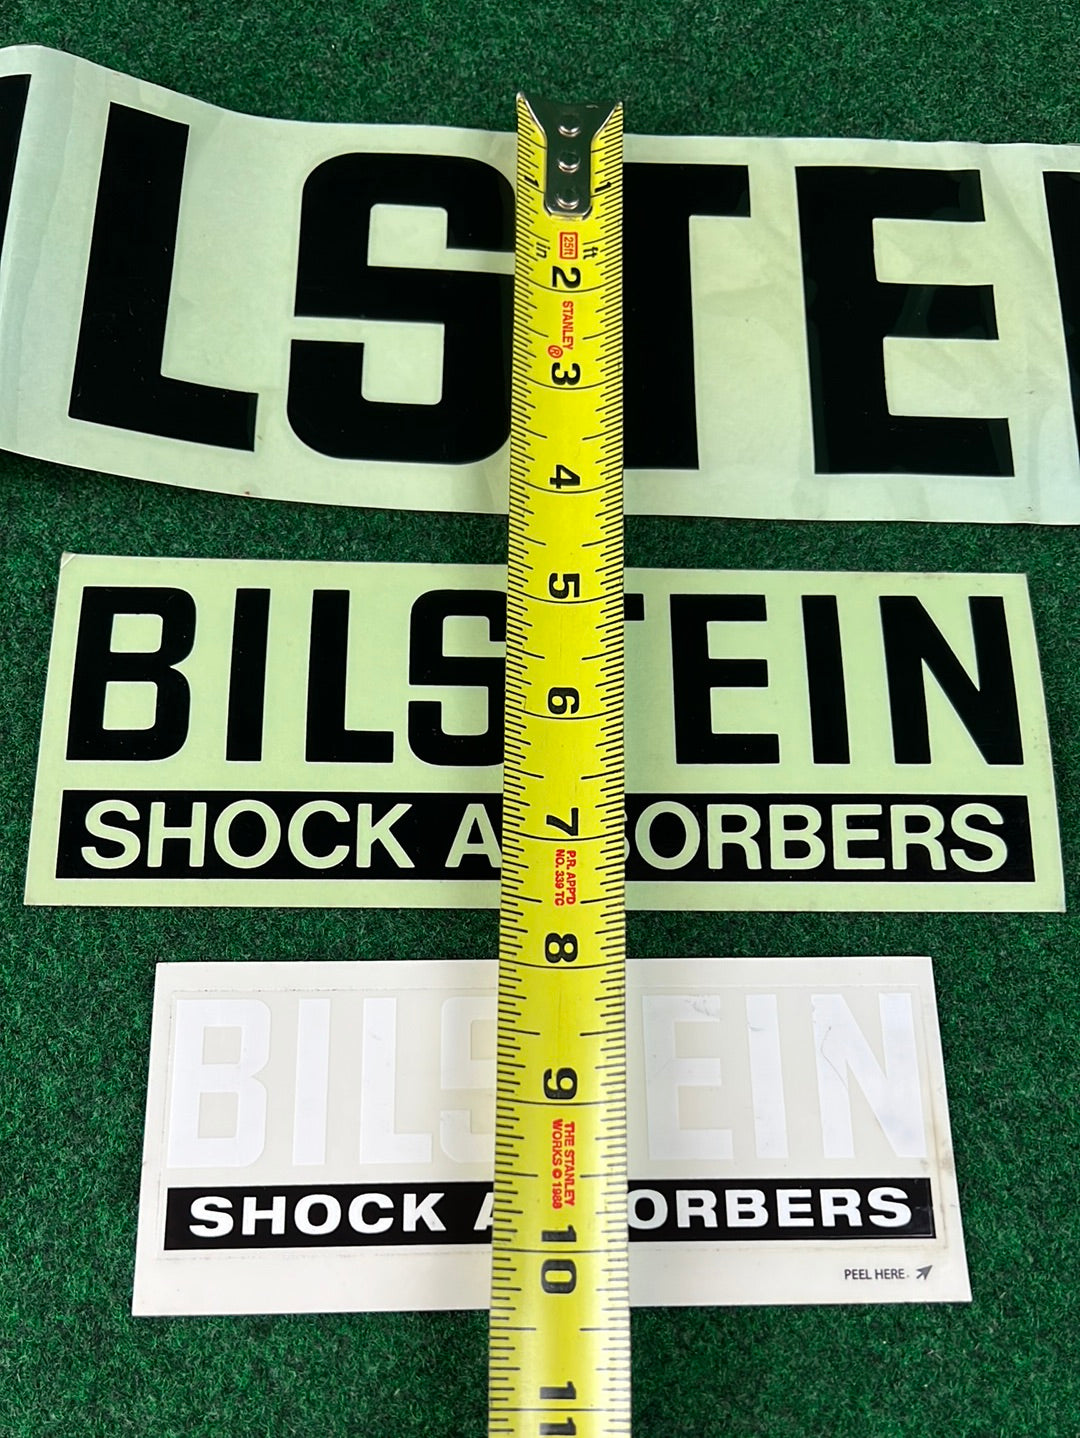 BILSTEIN Shock Absorbers - Qty. 3 Sticker Set